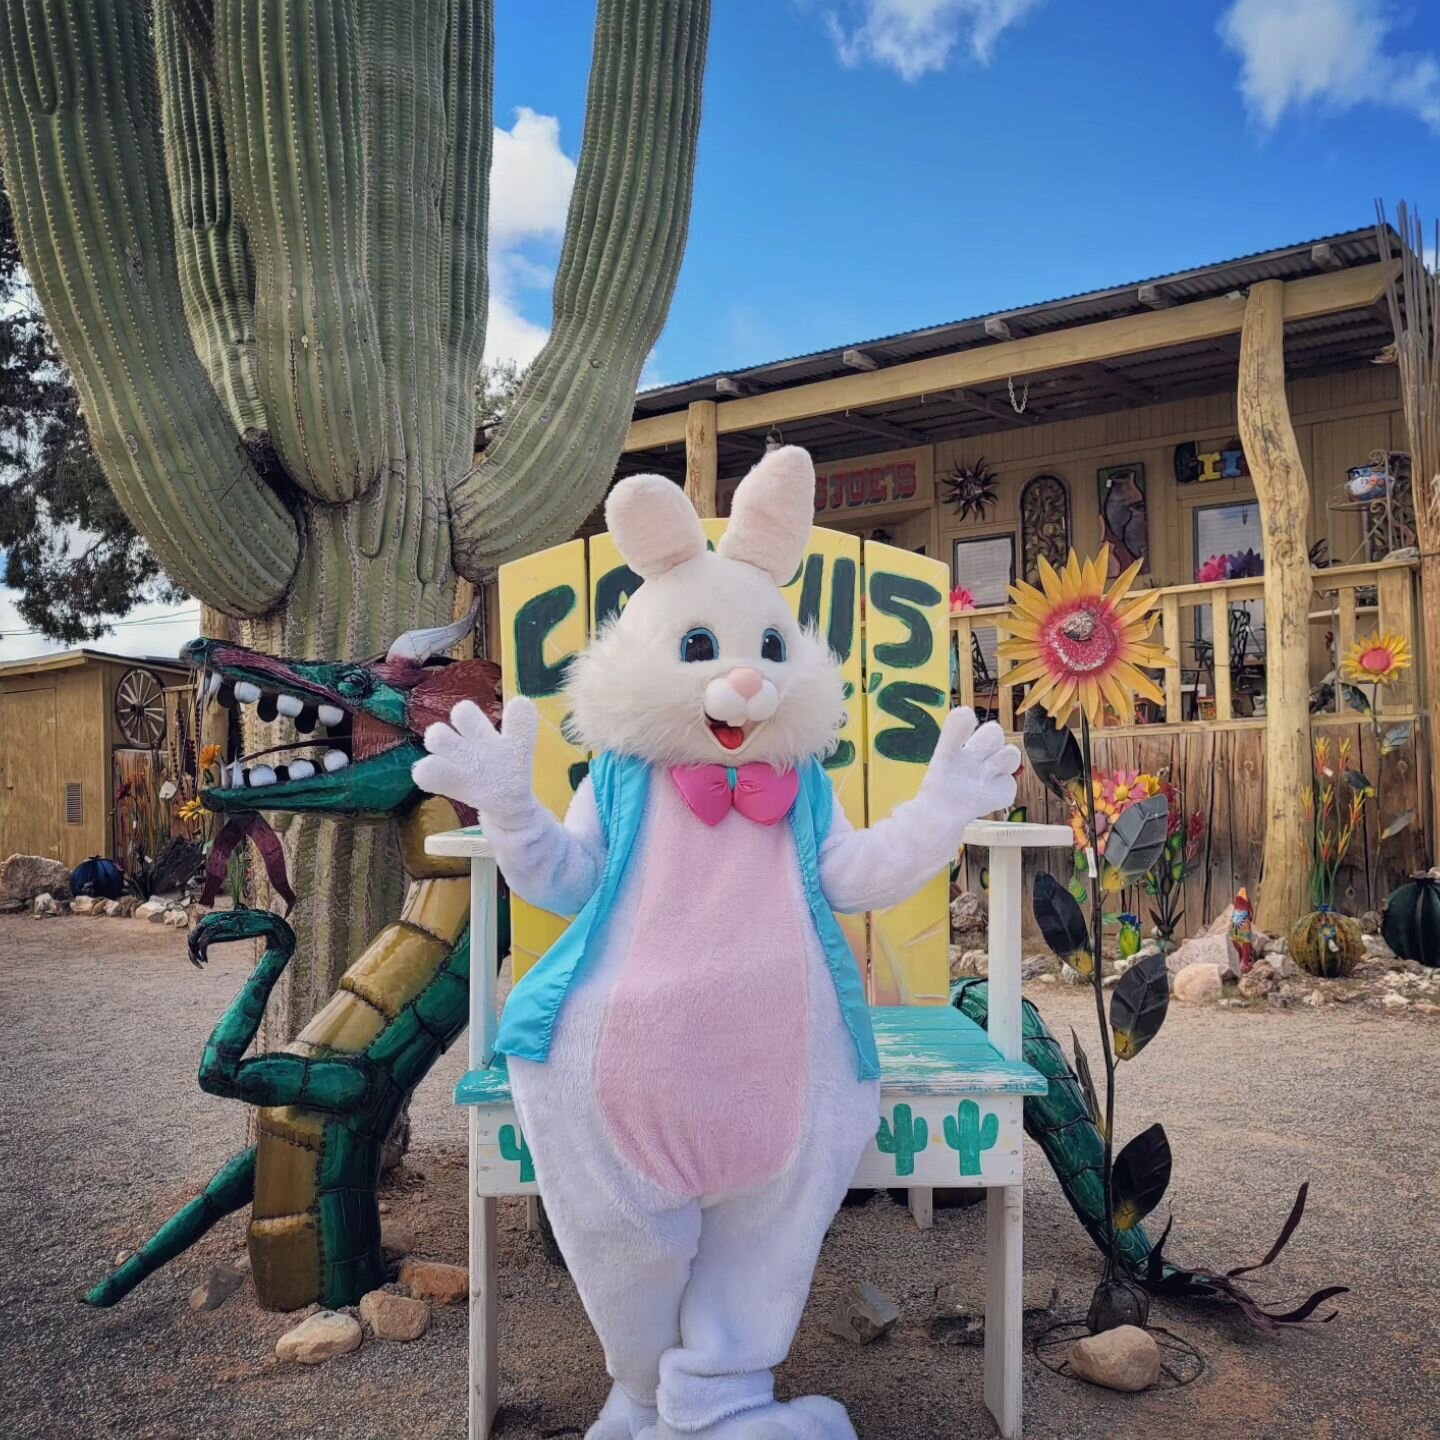 🌵🐰 Happy Easter, friends and family! 🌼🐰

-
Cactus Joe's Las Vegas
📍 12740 Blue Diamond Rd.
Las Vegas NV, 89161

📞 702-875-1968
✉️ cactusjoeslasvegas@gmail.com

🌷 HOURS 🌷
Mon &ndash; Sat: 9 am &ndash; 5 pm
Sun: 10 am &ndash; 5 pm

For inventor